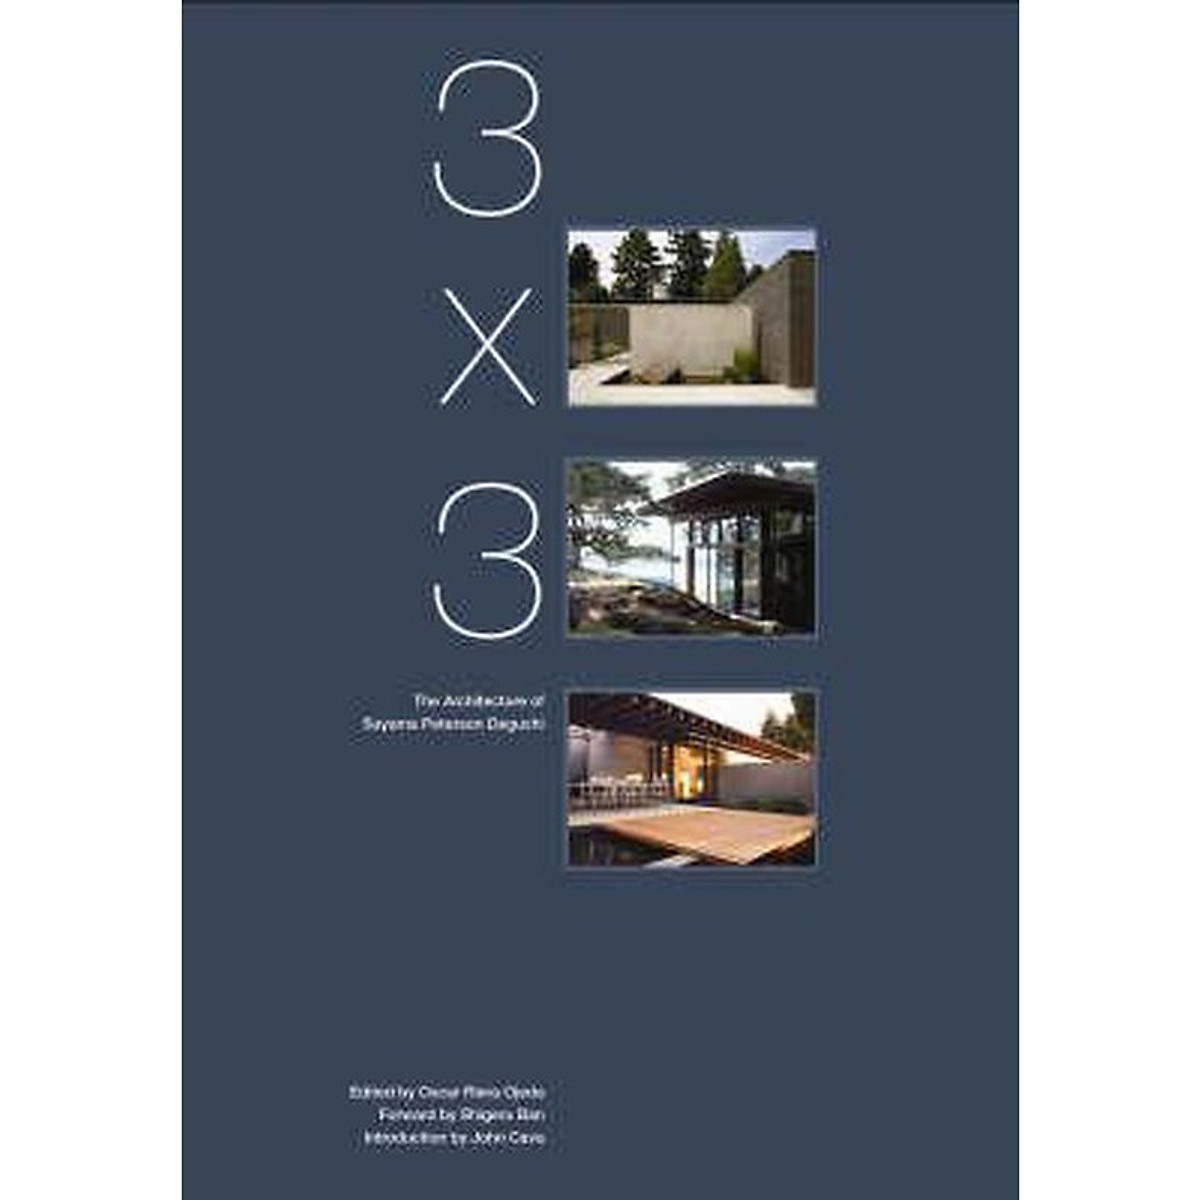 3 x 3: Architecture of Suyama Peterson Deguchi